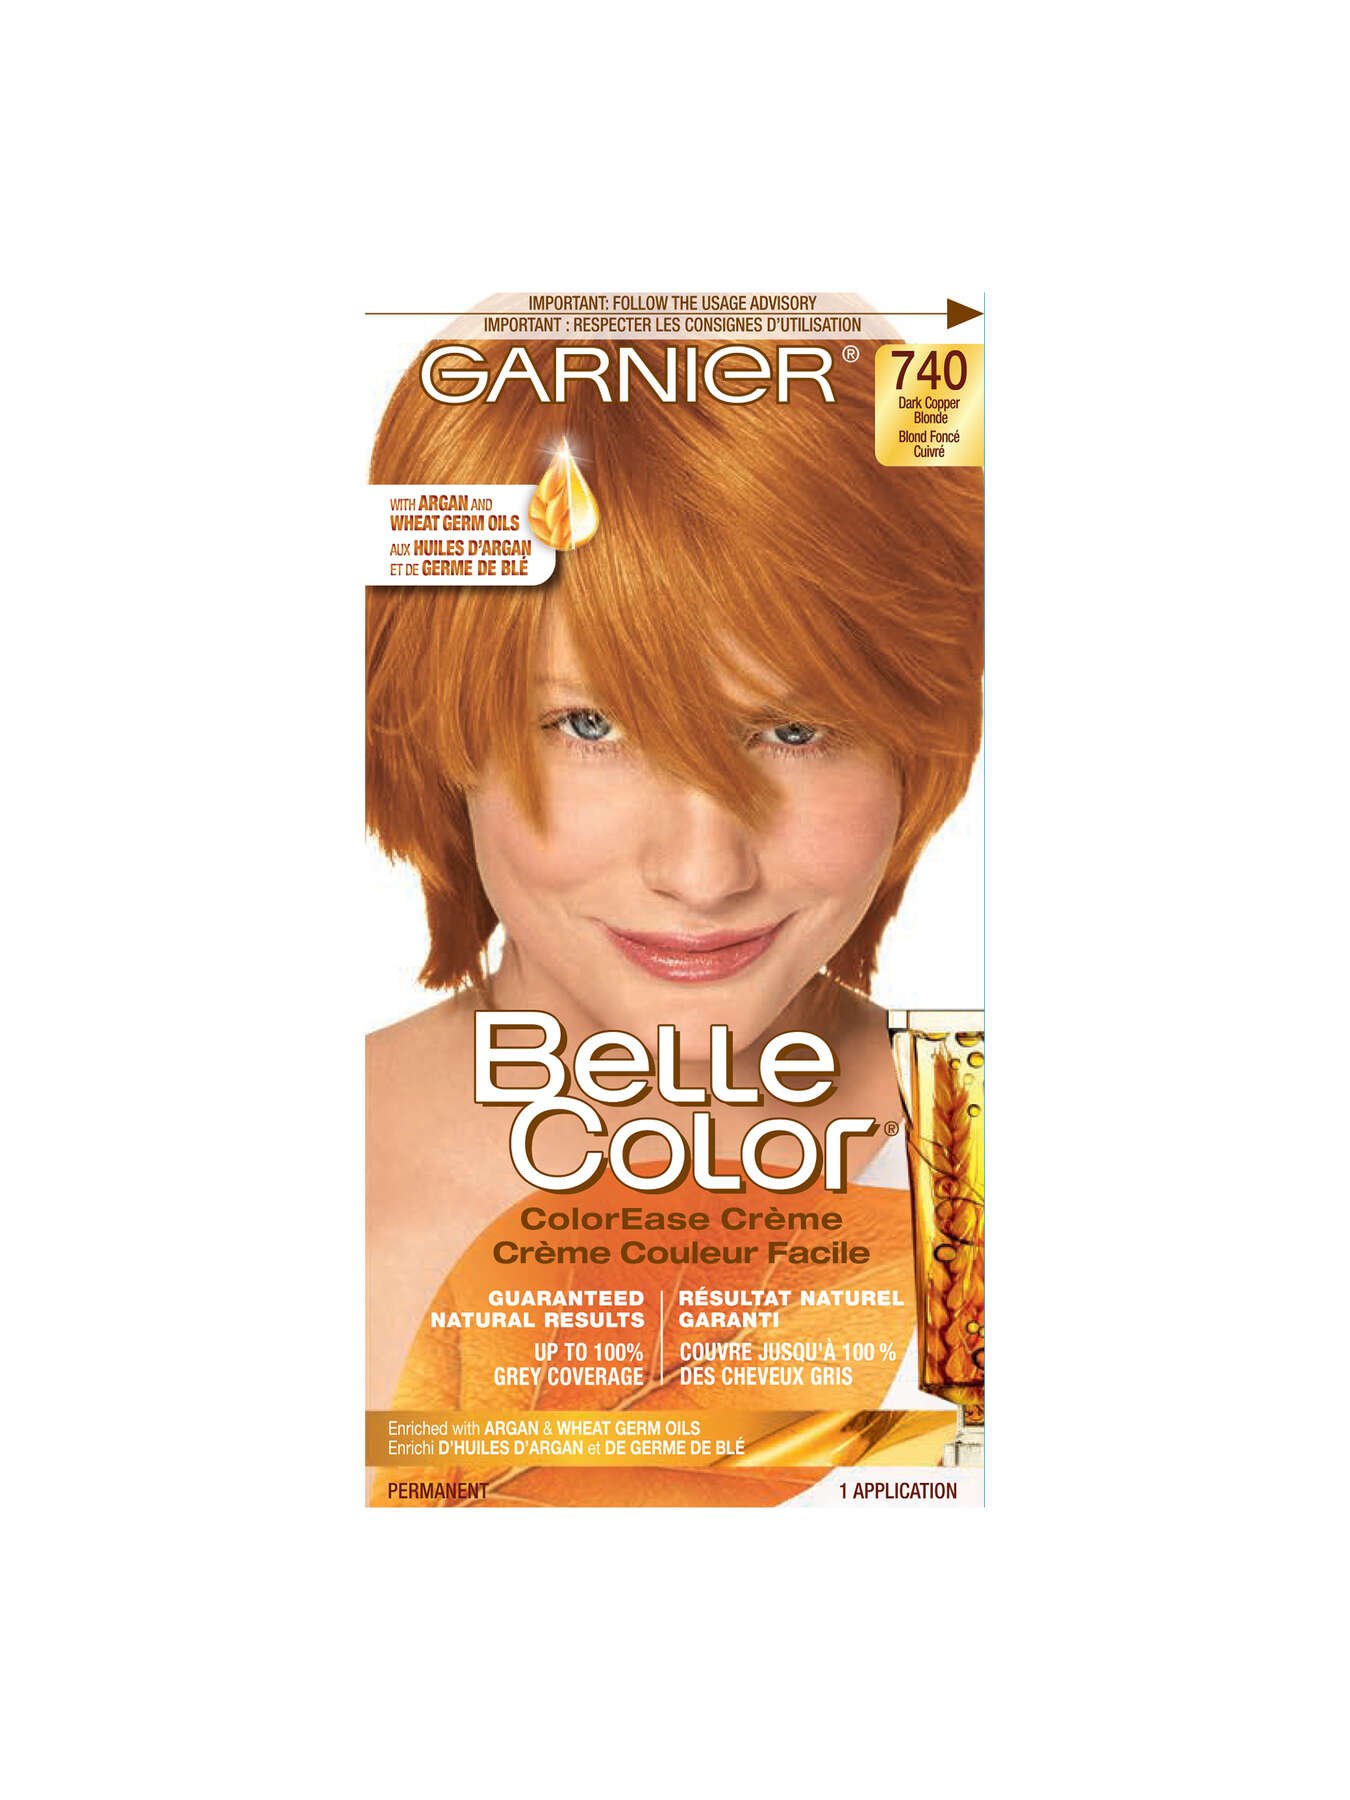 garnier hair dye belle color 740 dark copper blonde 603084412310 t1